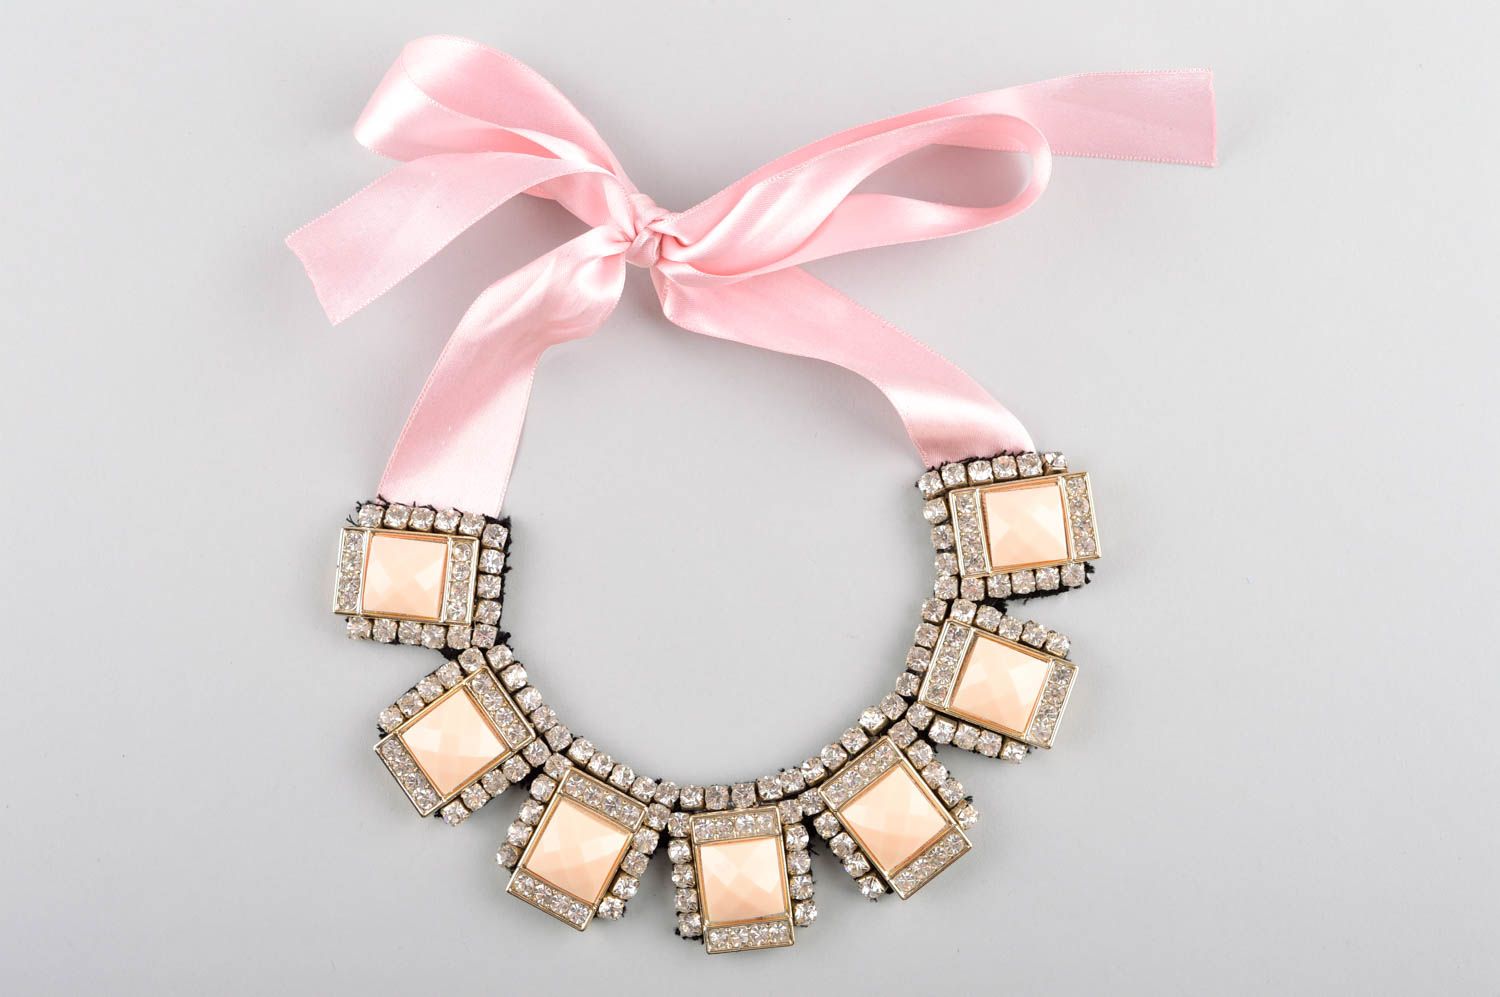 Handmade stylish jewelry elite designer accessories feminine unusual necklace photo 2